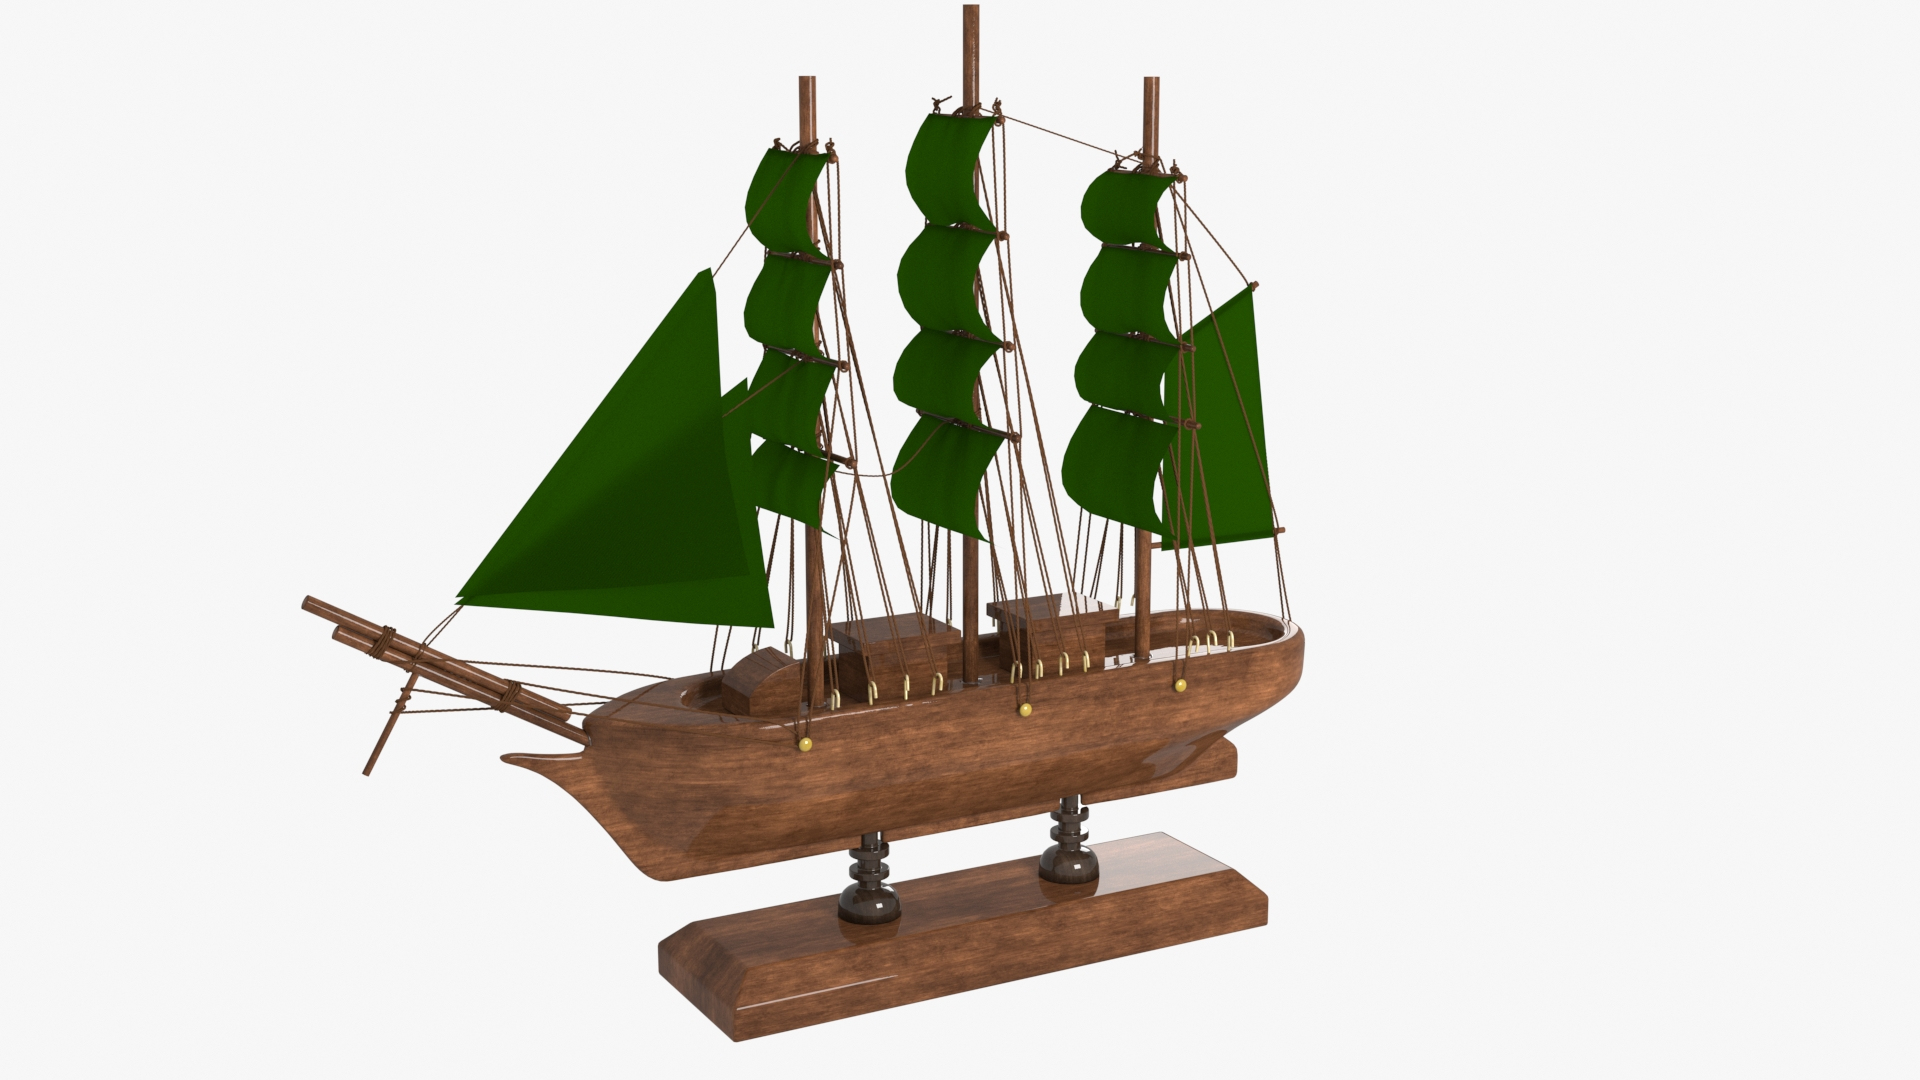 3D Wooden Decorative Ship model https://p.turbosquid.com/ts-thumb/dn/QNf8Cy/ni/ship/jpg/1620711452/1920x1080/turn_fit_q99/439ff21ab112e1f242b1999cddd4798da7e38442/ship-1.jpg